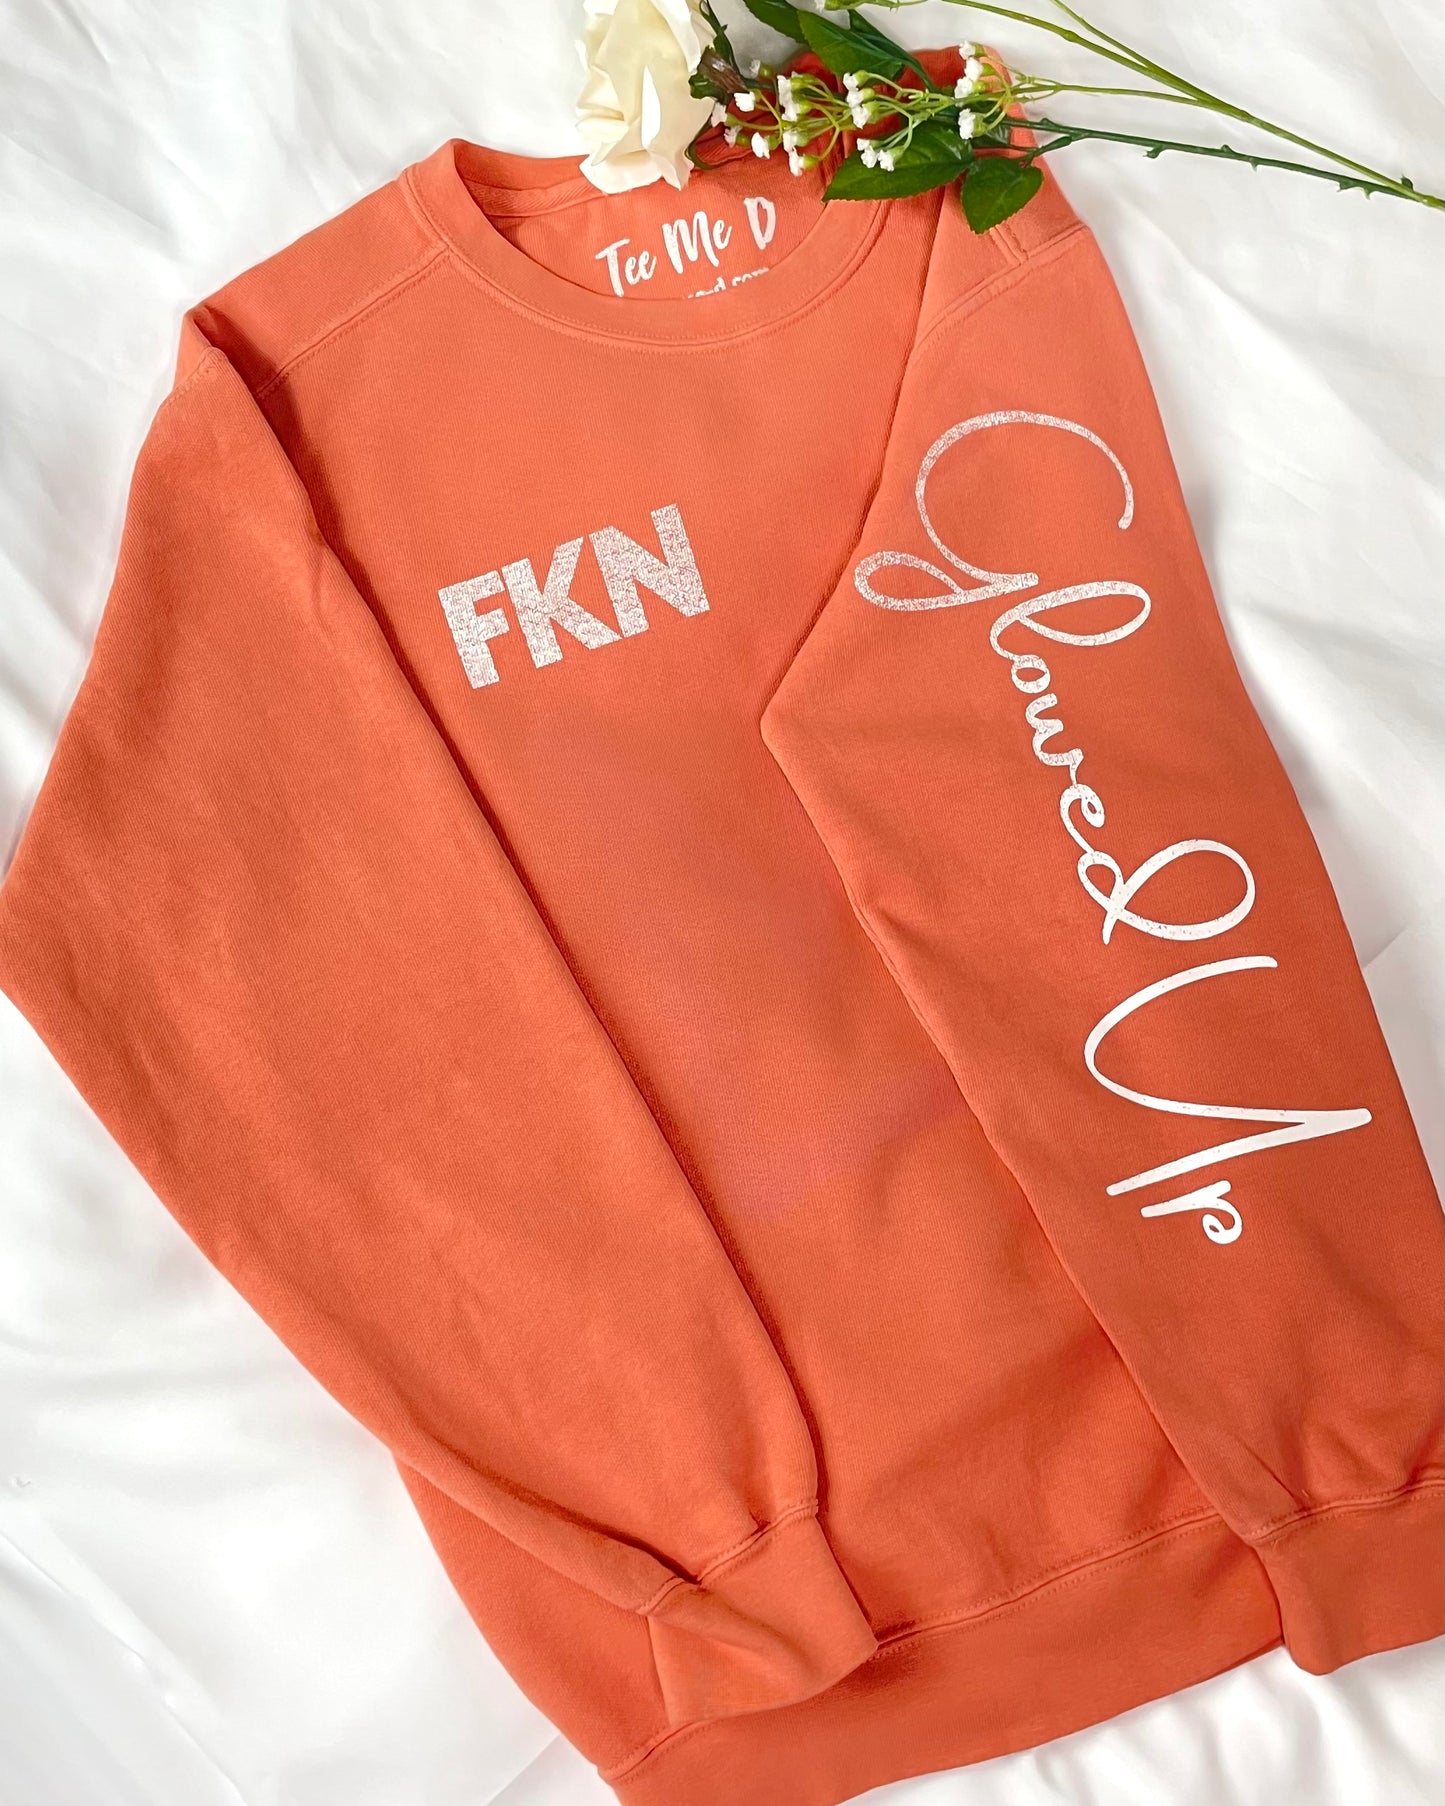 FKN GLOWED UP crewneck sweatshirt